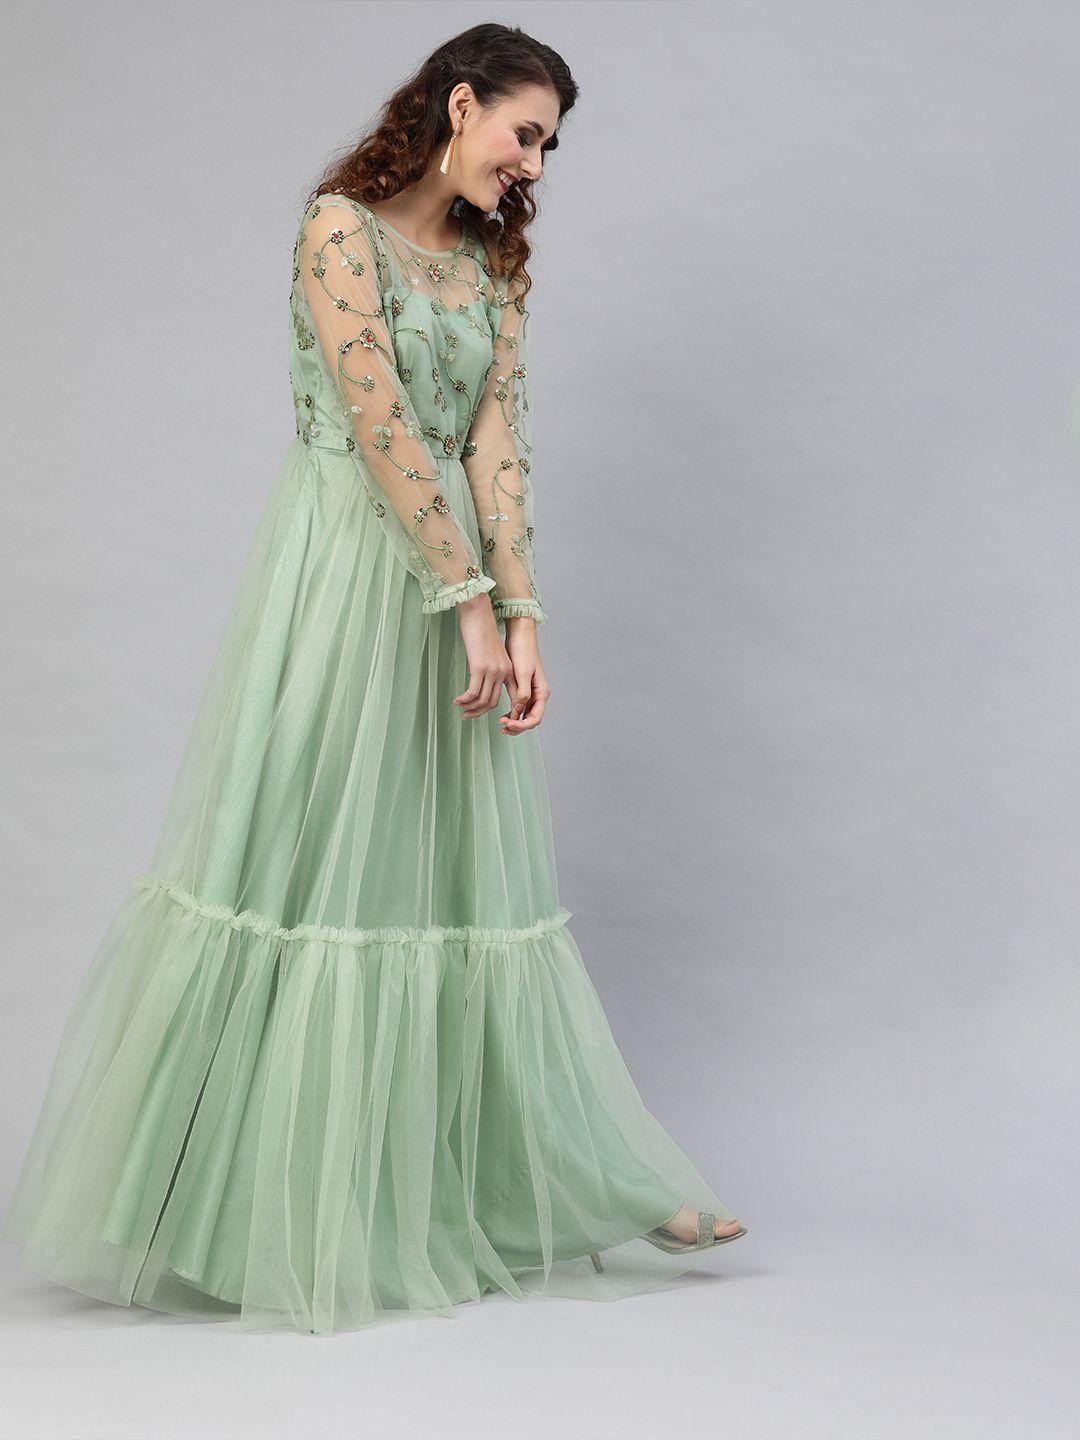 inddus women green embellished net semi-sheer maxi dress